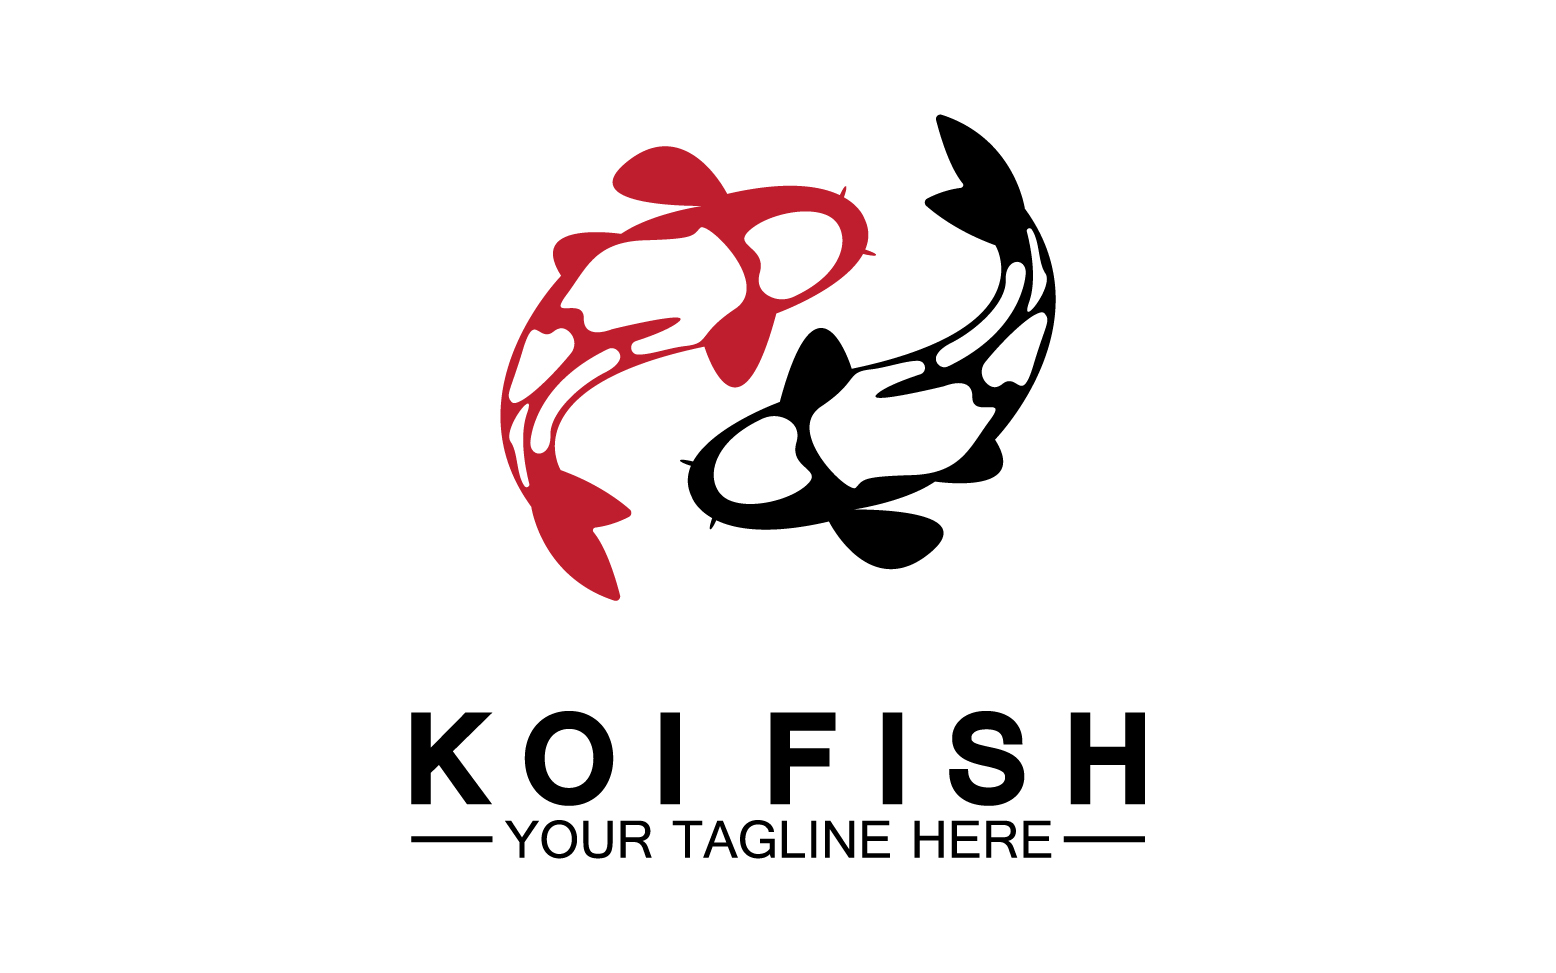 Fish koi black and red icon logo vector v23